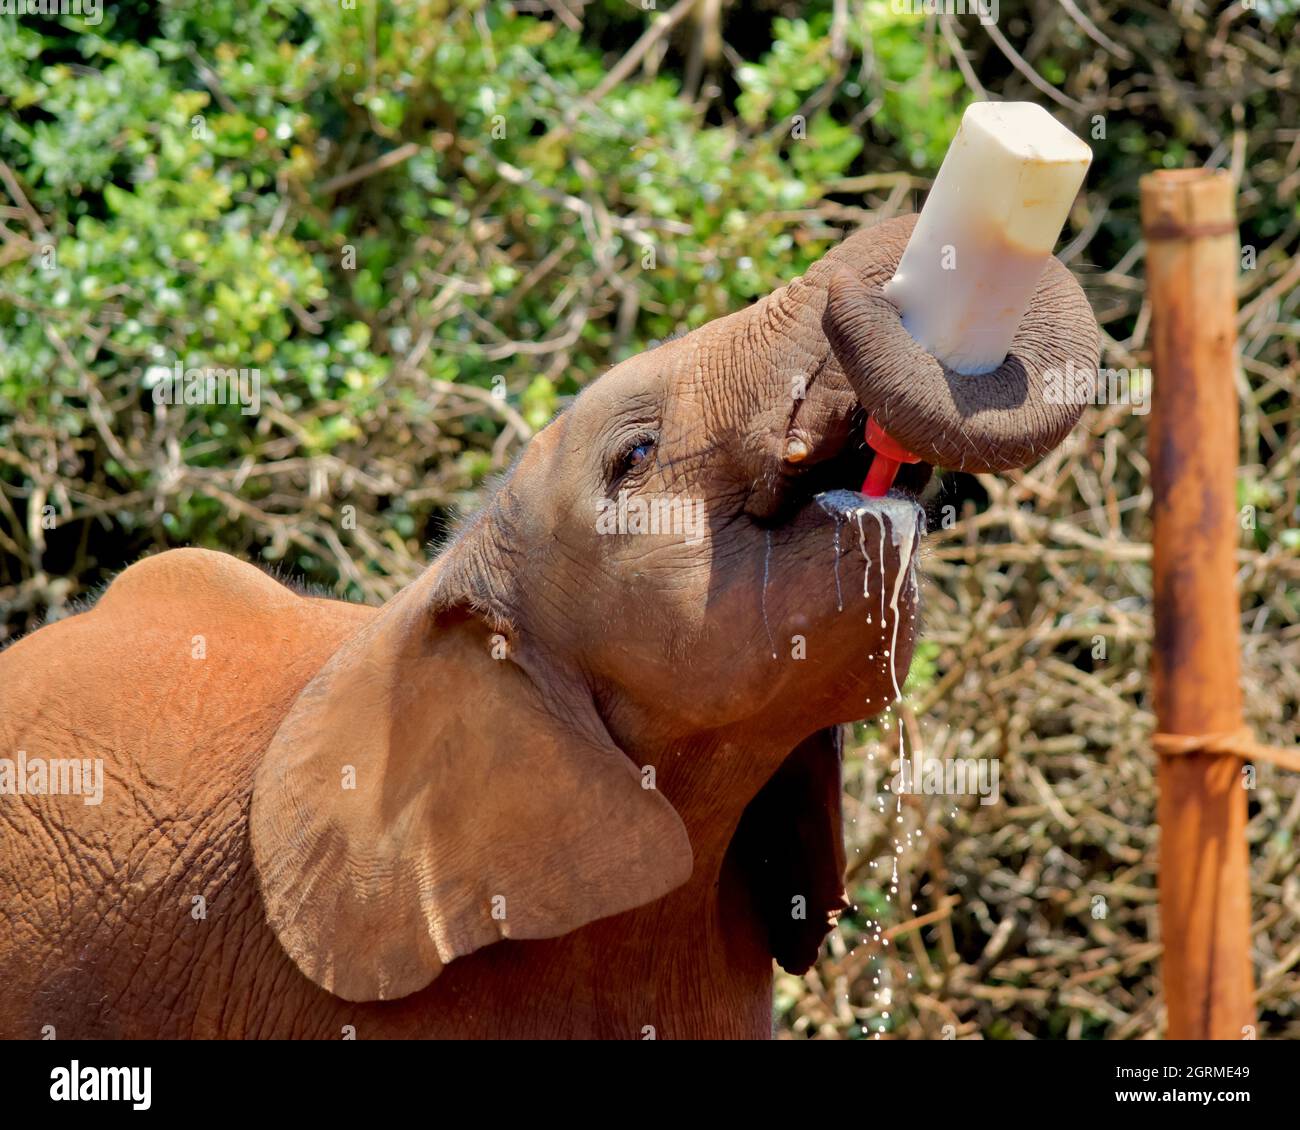 An orphan elephant calf (Loxodonta africana) drinking milk from a bottle. Nairobi National Park, Kenya. Stock Photo